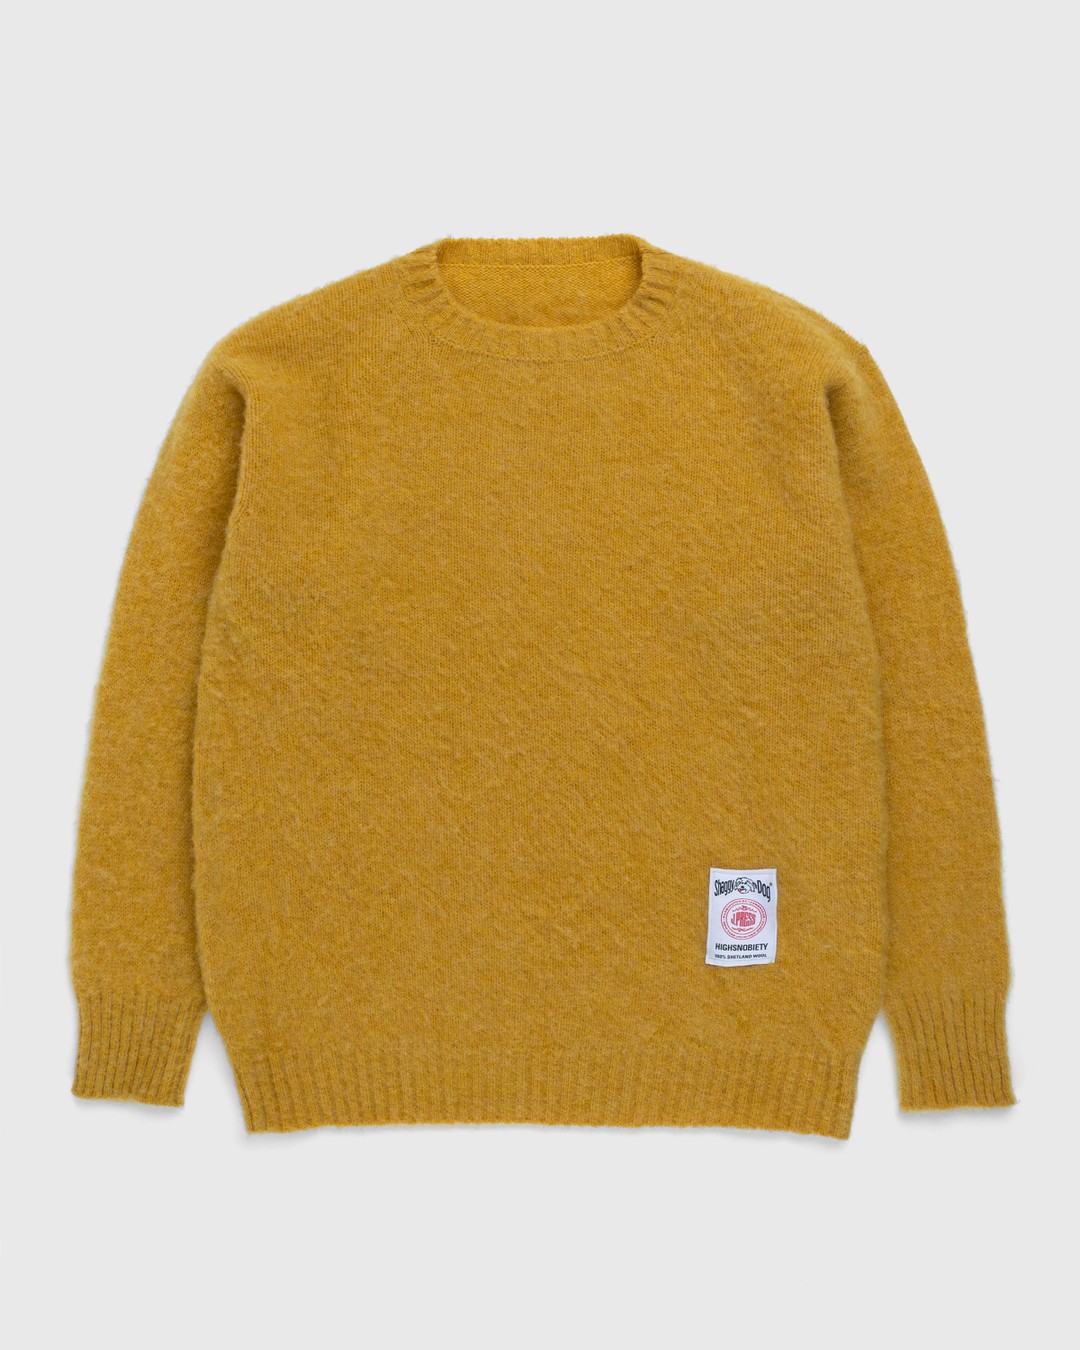 J. Press x Highsnobiety – Shaggy Dog Solid Sweater Yellow - Crewnecks - Yellow - Image 1